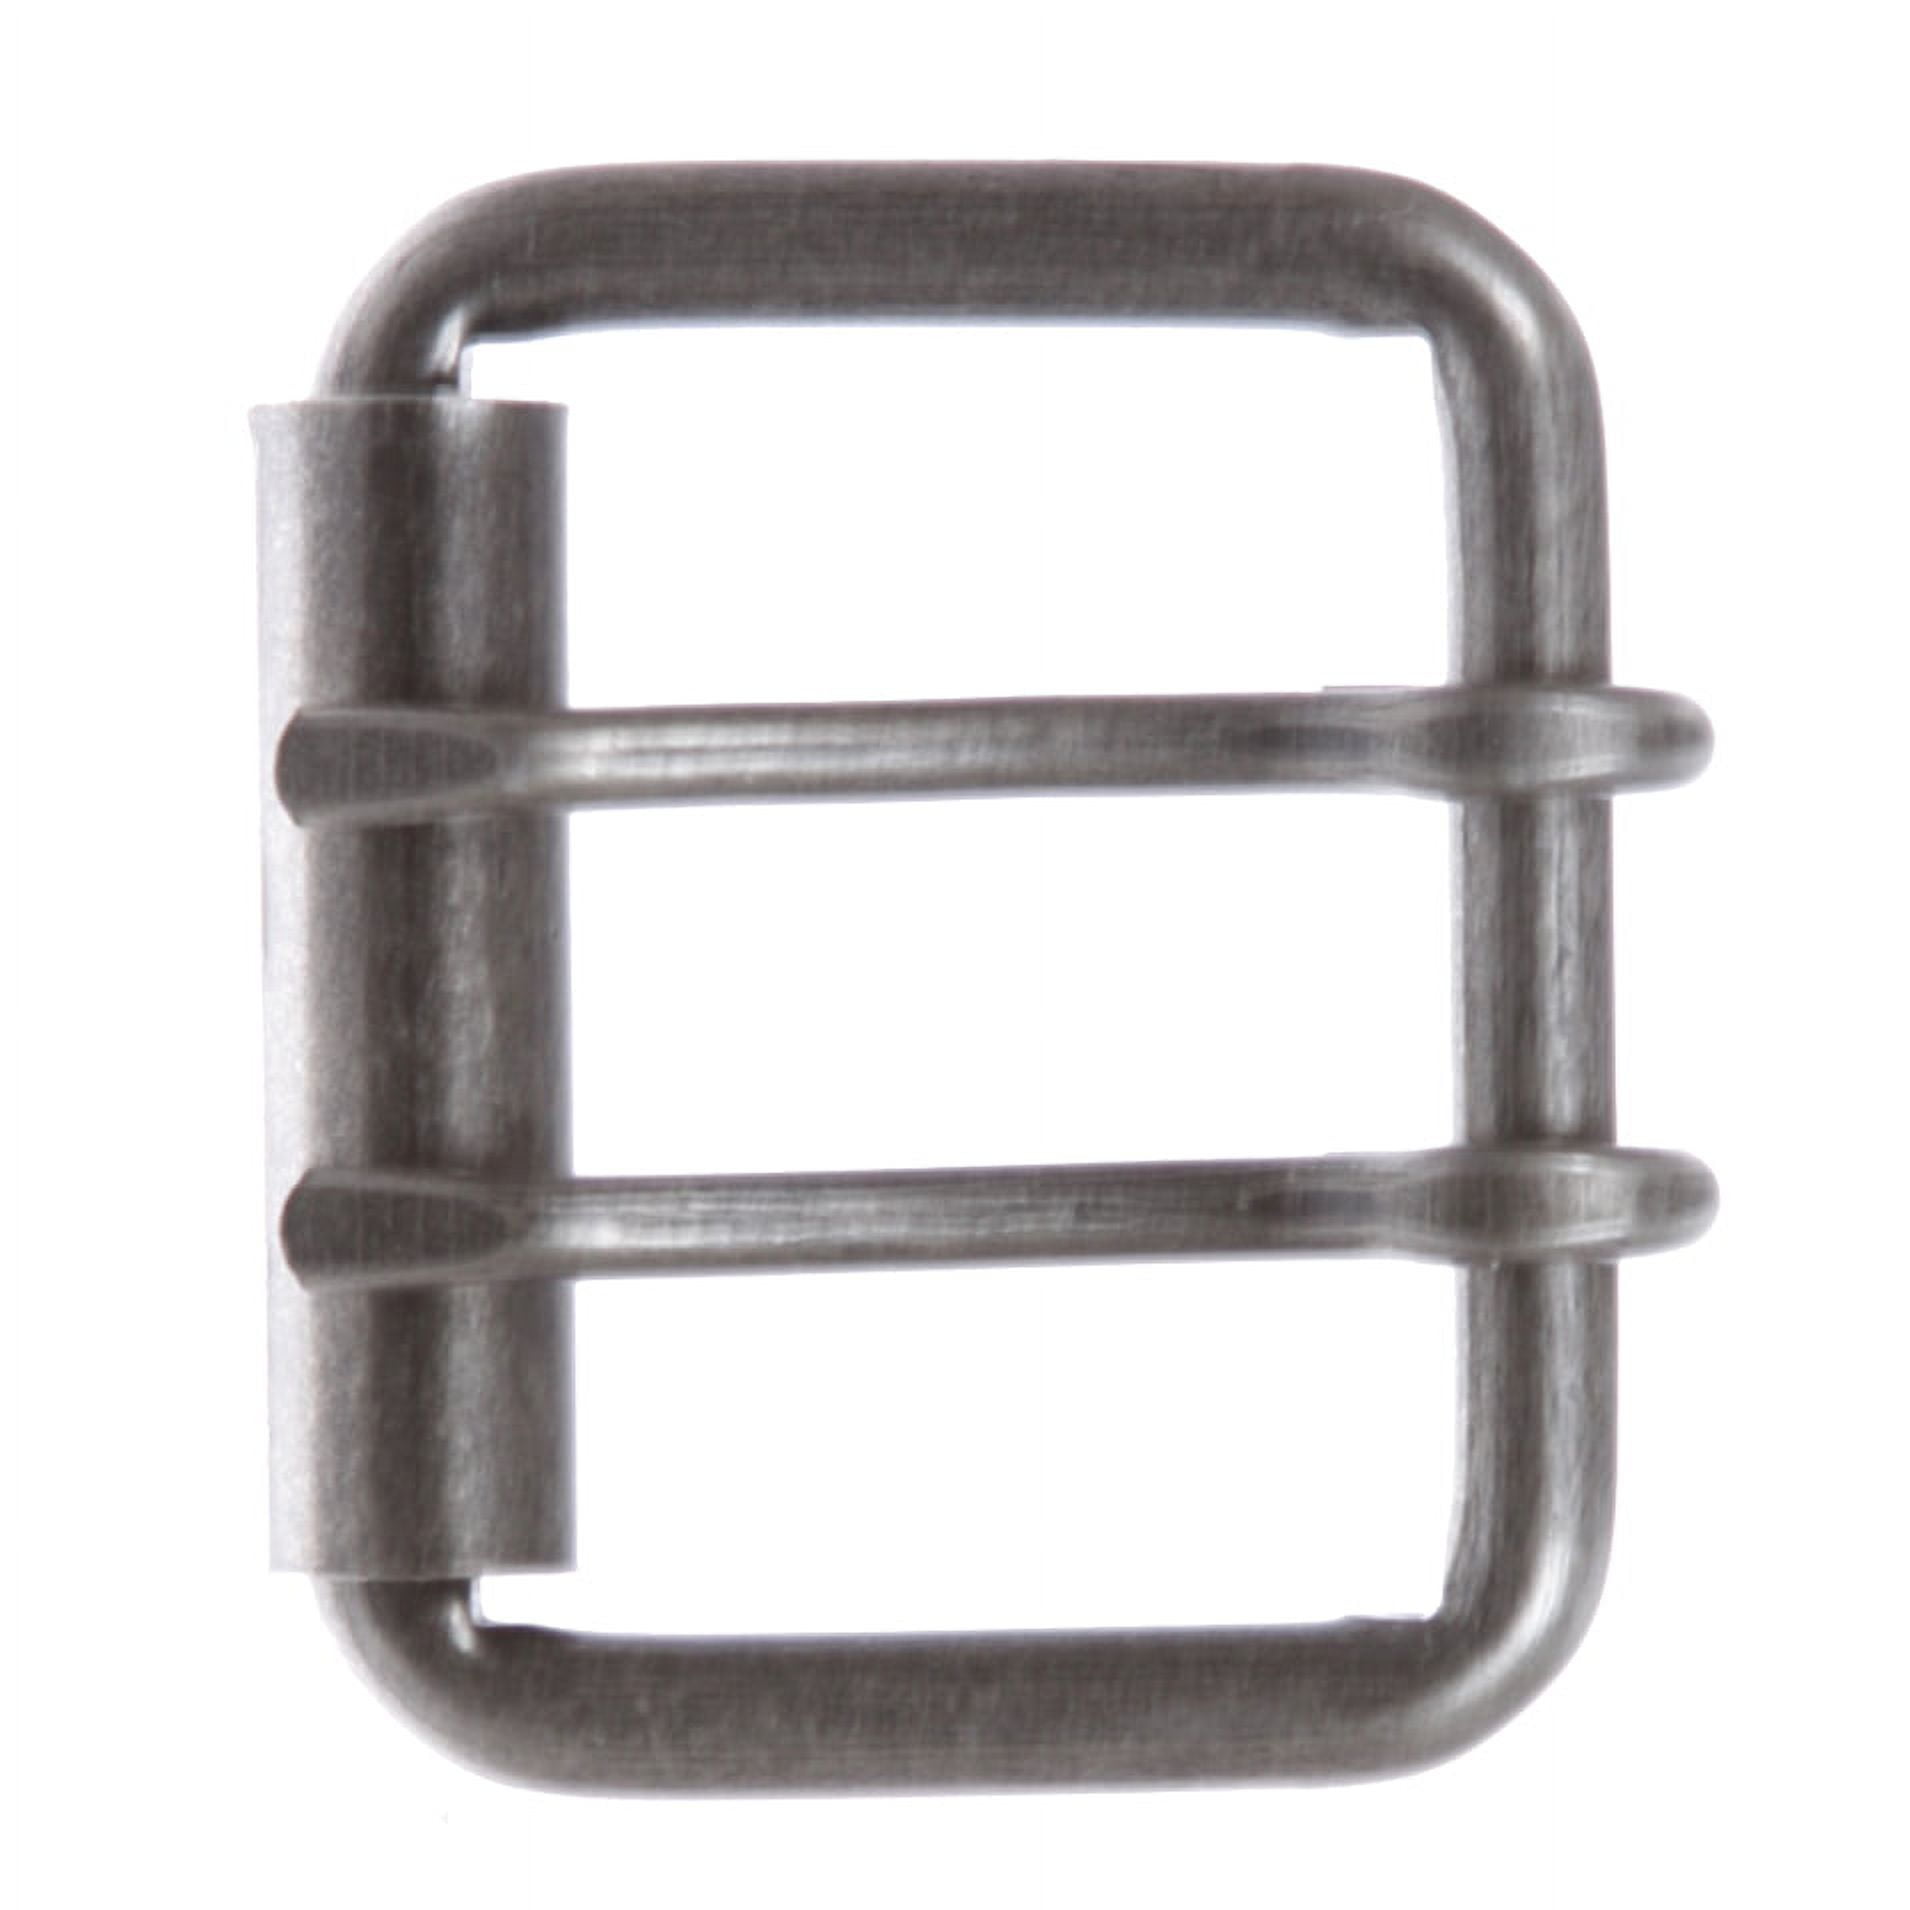 Single Prong Metal Belt Buckle Replacement buckle for belt fits  1-3/8(35mm) Belt Strap